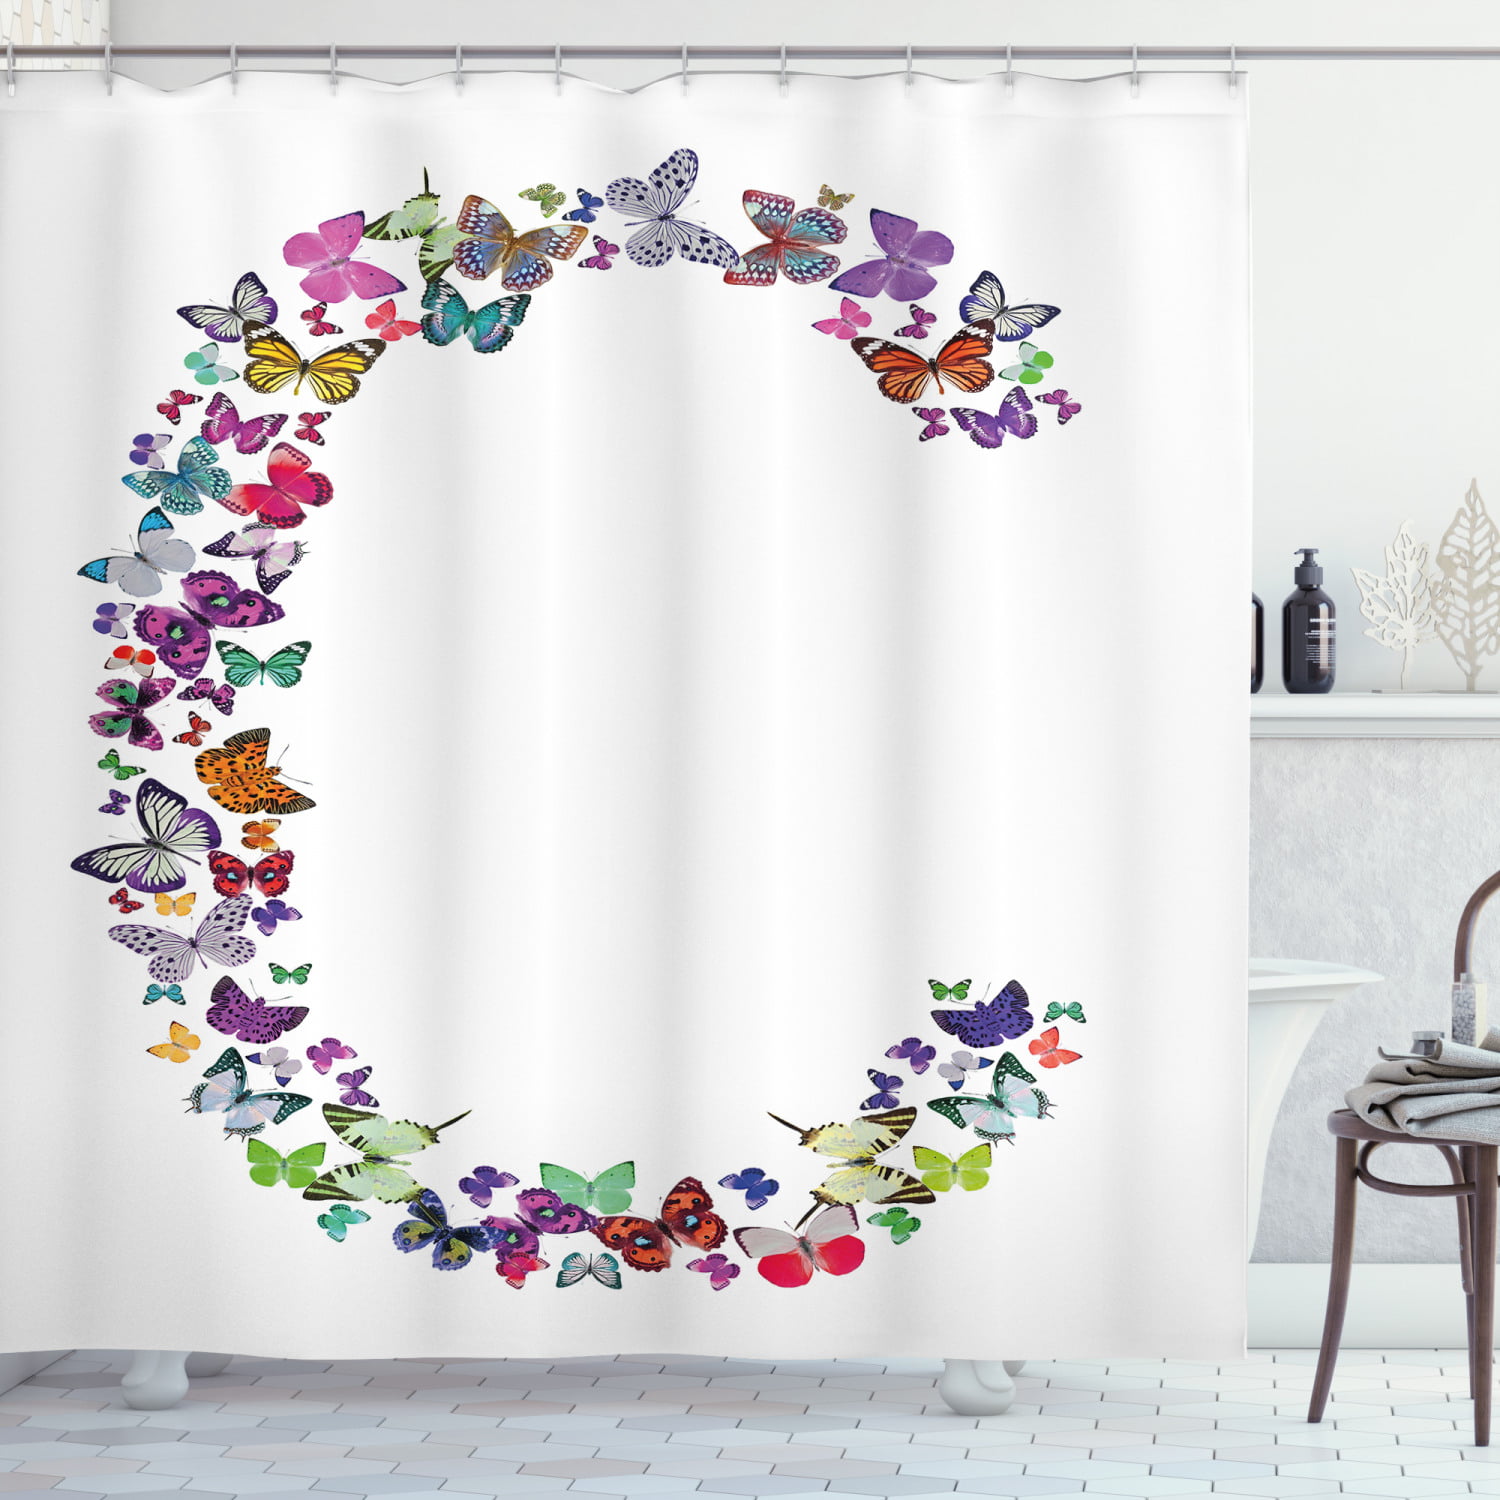 Details about  / Shower Curtain Art Bathroom Decor Flying Butterflies Bath Curtains 12 Hooks